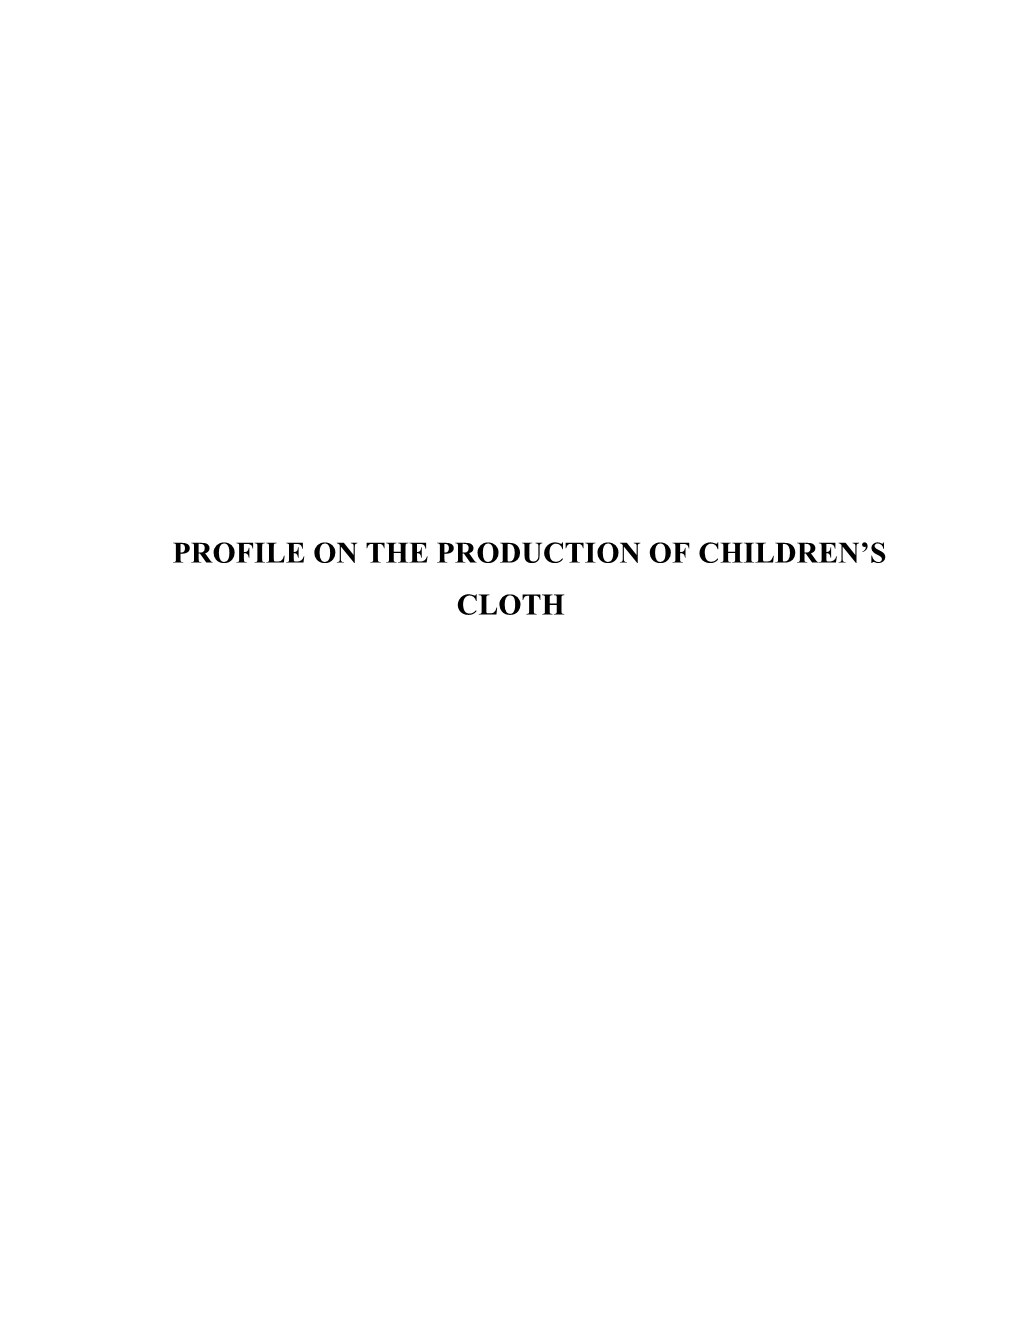 Profile on Production of Babies/Children Garment